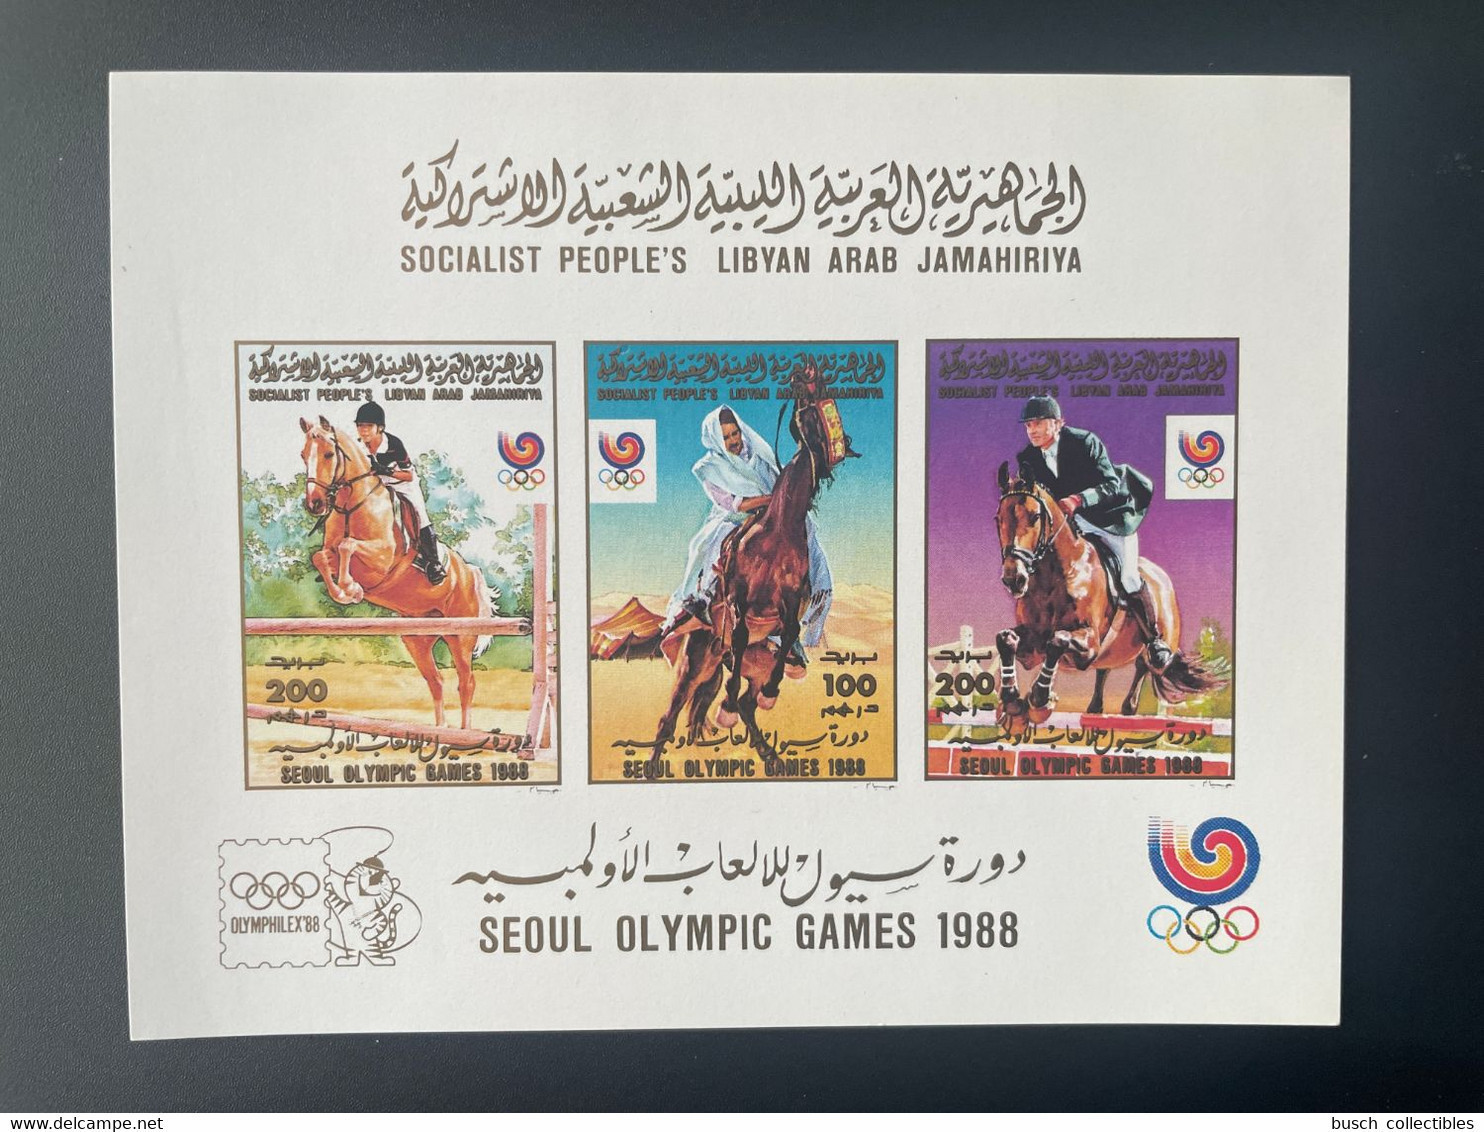 Libye Libya 1988 IMPERF ND Mi. Bl. 117 B Seoul Olympic Games Olymphilex Horse Riding Pferd Cheval Jeux Olympiques - Estate 1988: Seul